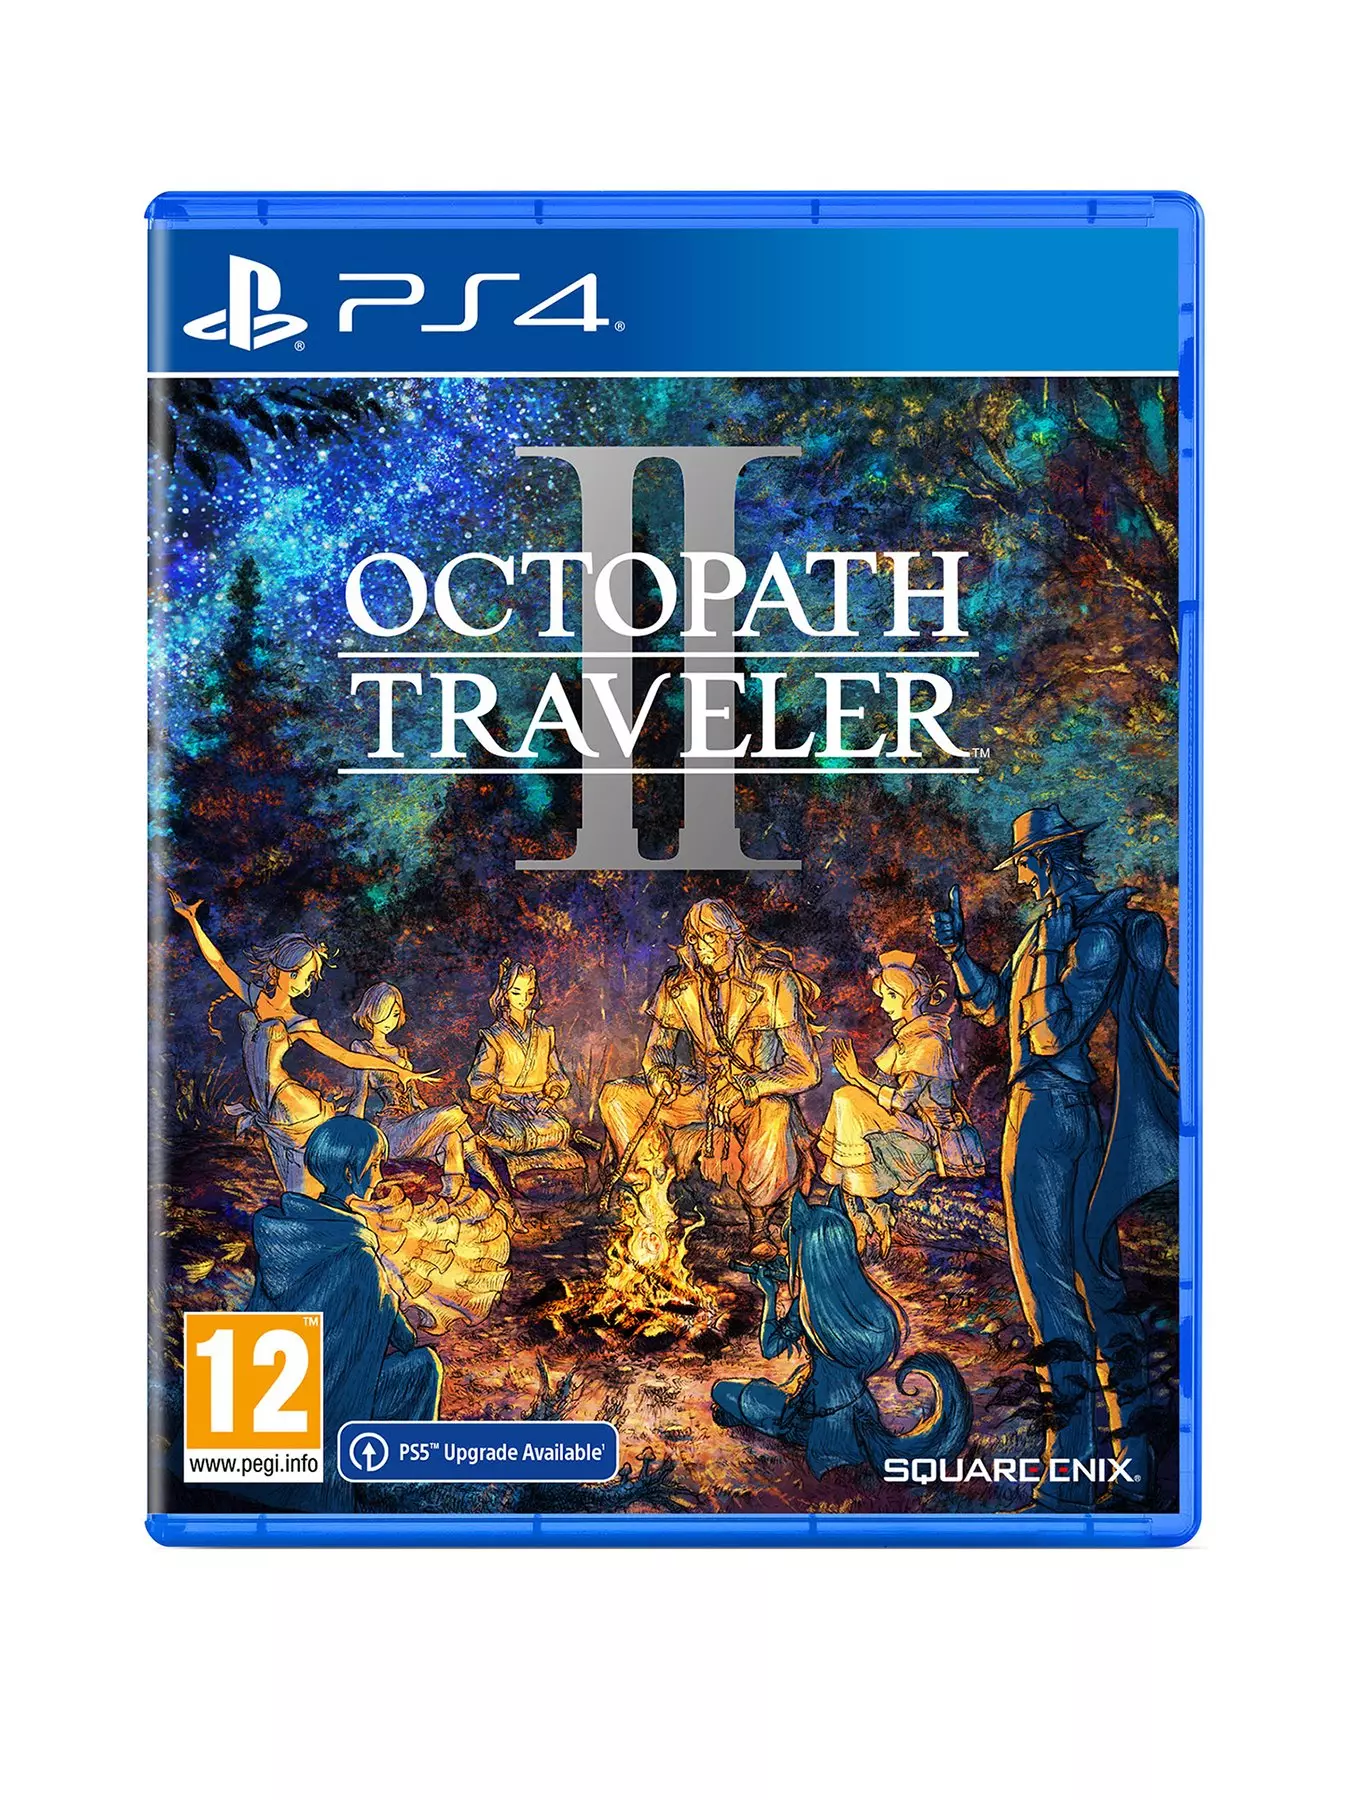 Another Eden Announces Octopath Traveler Collaboration - Noisy Pixel